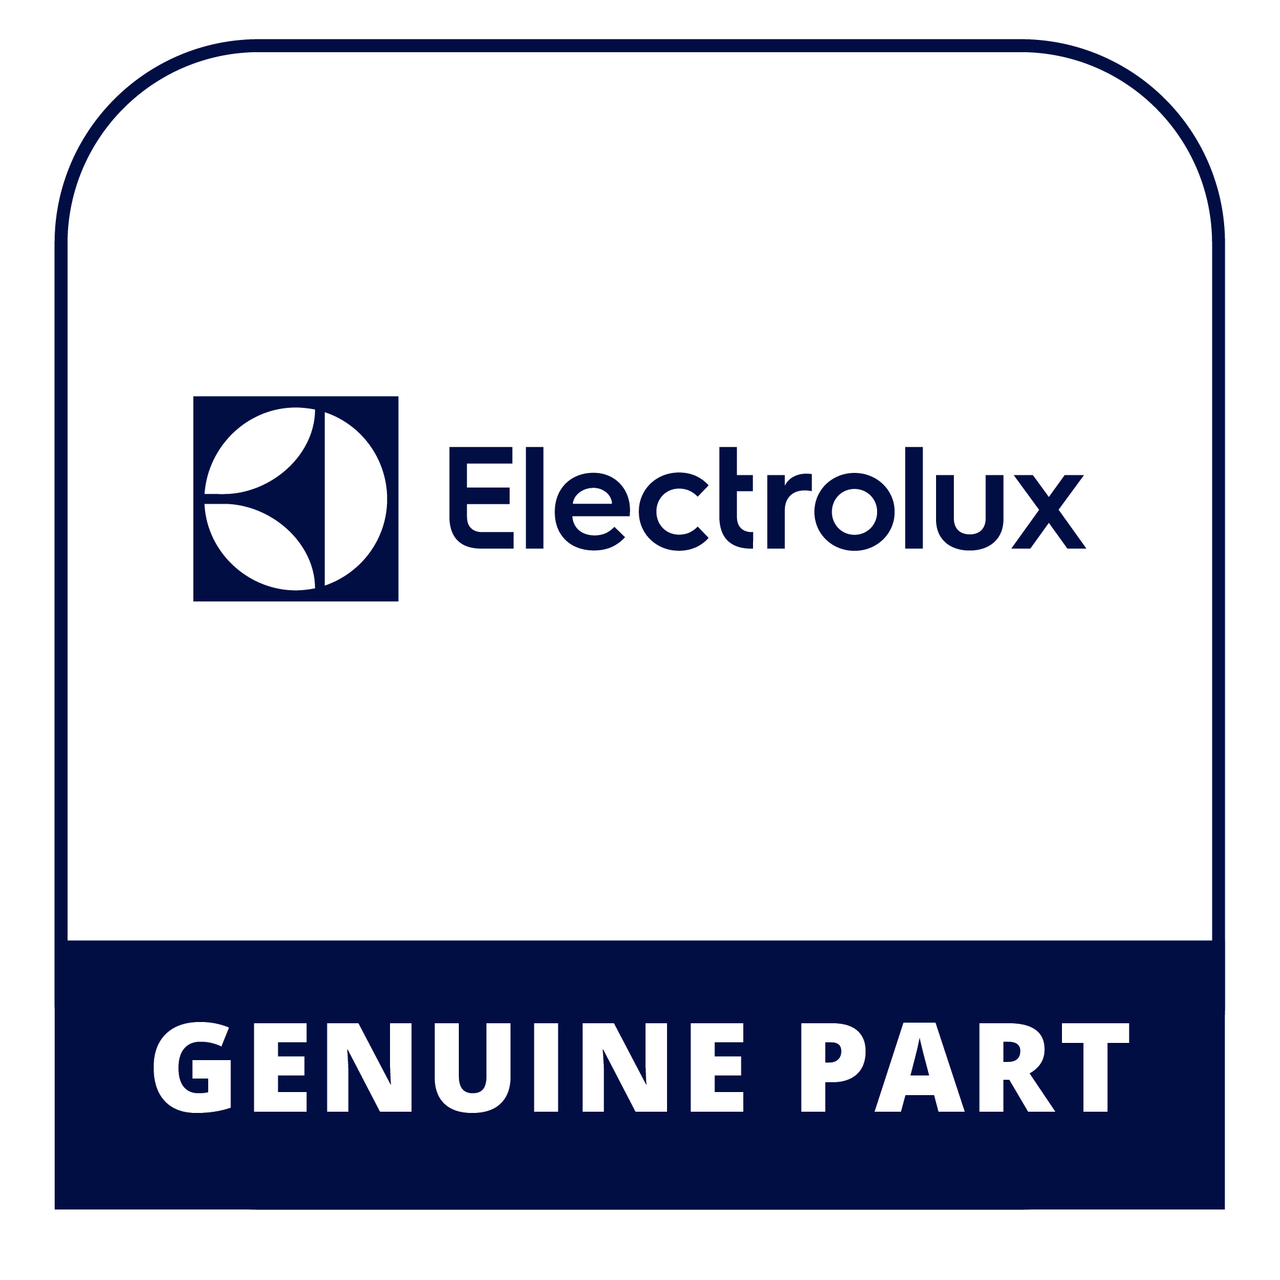 Frigidaire - Electrolux 5304477395 Panel - Genuine Electrolux Part